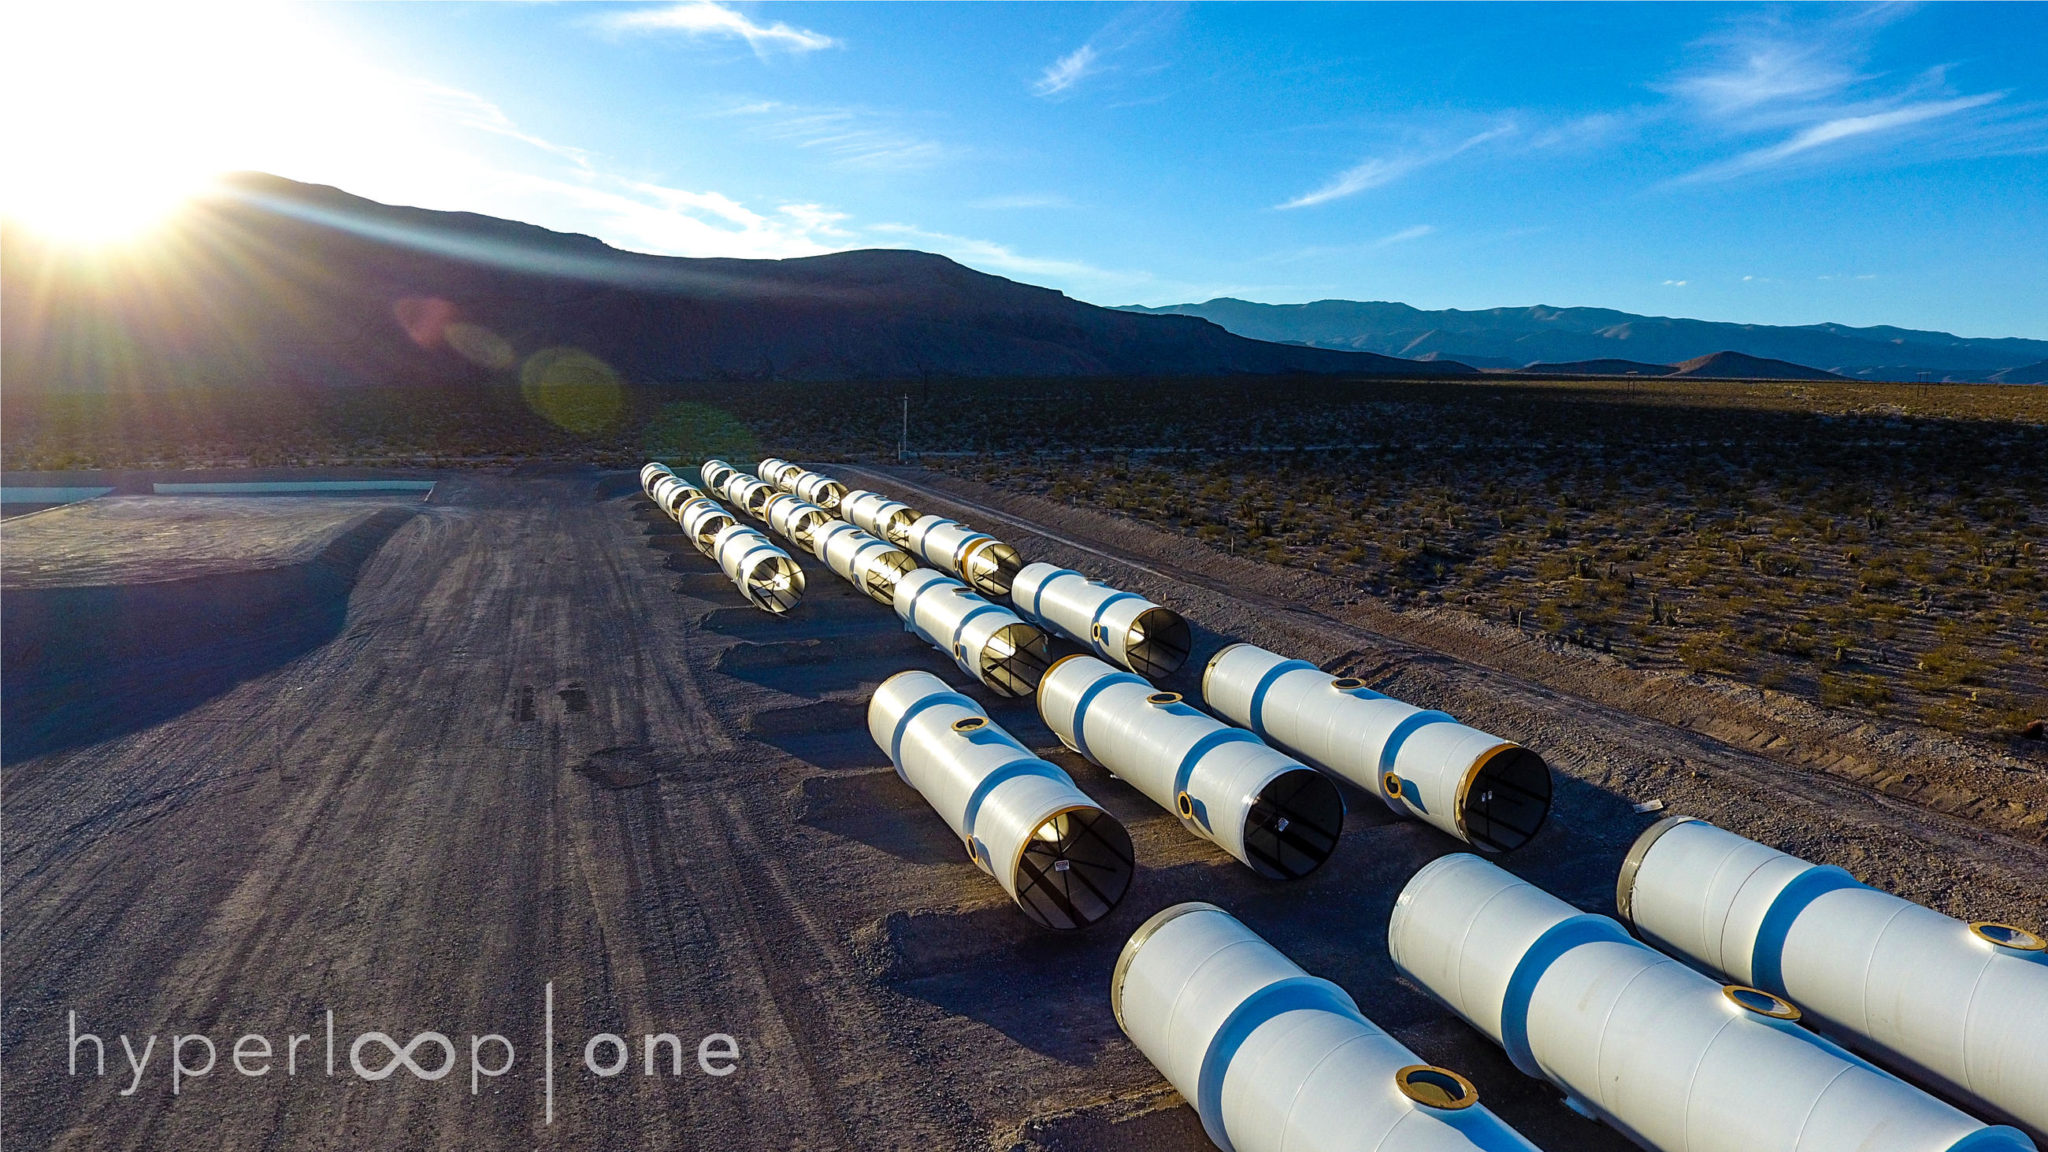 Hyperloop One Nevada Test